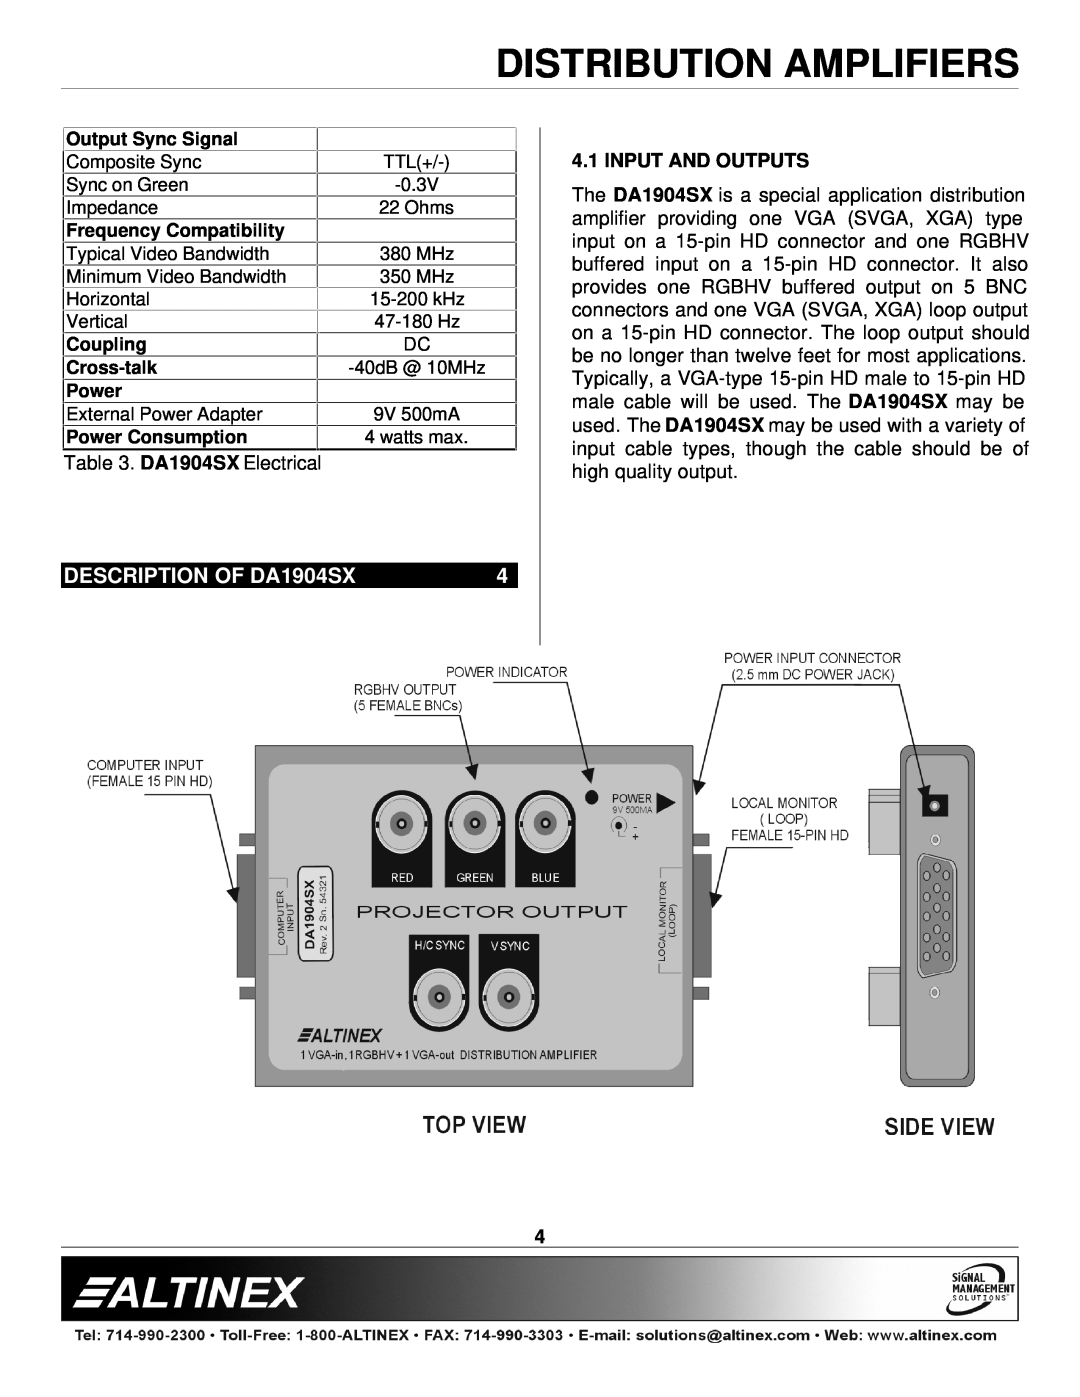 Altinex manual DESCRIPTION OF DA1904SX, Input And Outputs, Distribution Amplifiers 